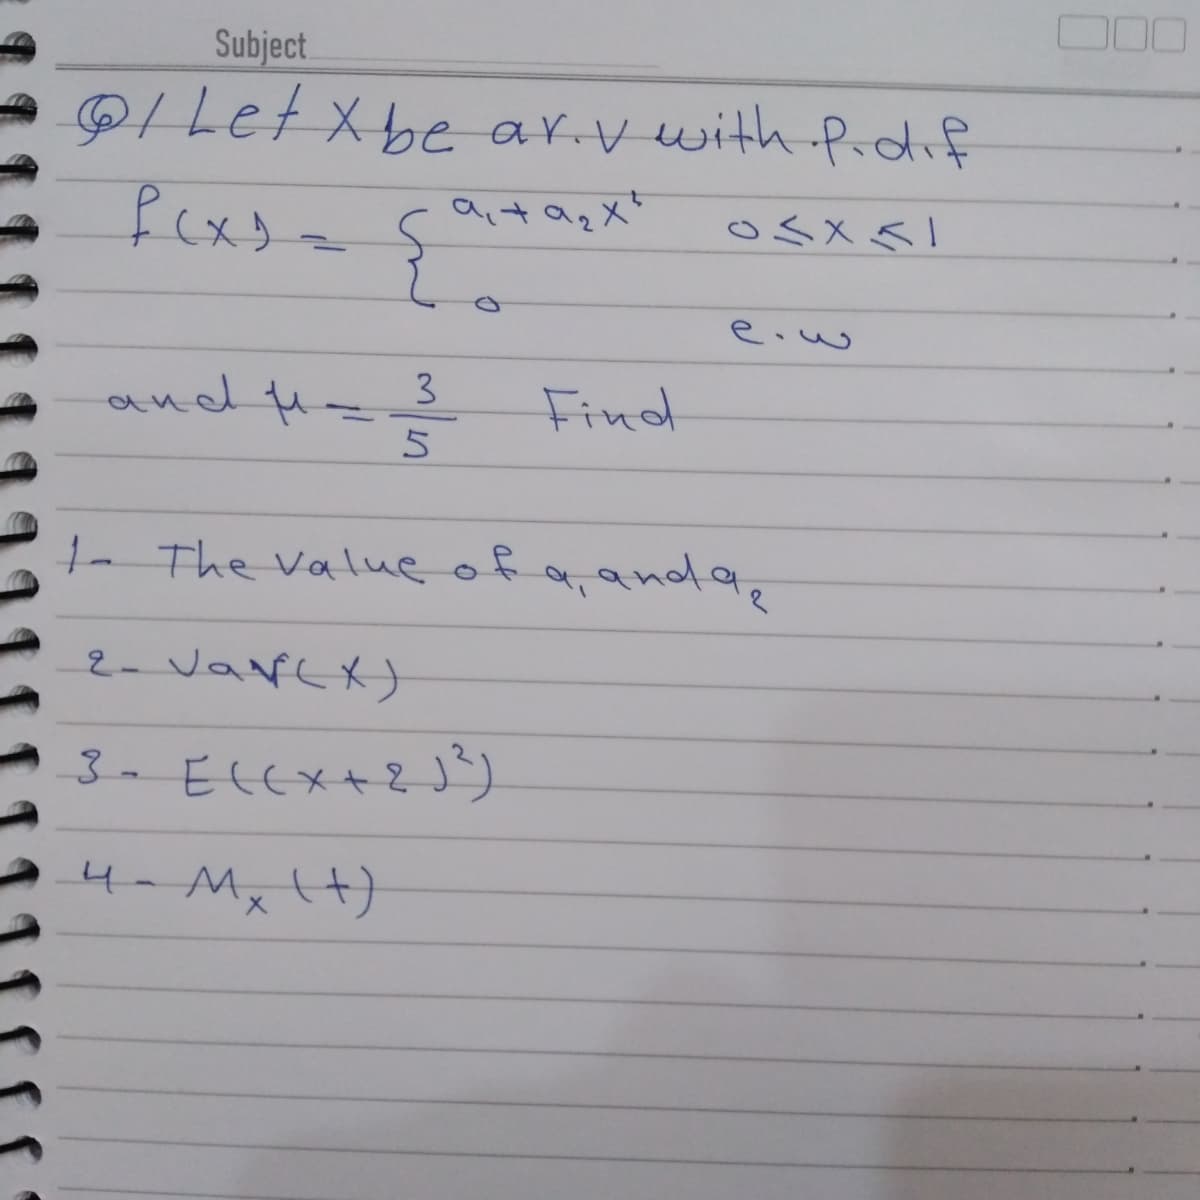 Subject
9ILet Xbe ar.v with Prdif
oハメク」
e.w
and tu
3
1- The value of
2- Varex)
3- ELEX+2J)
4-MxIt)
